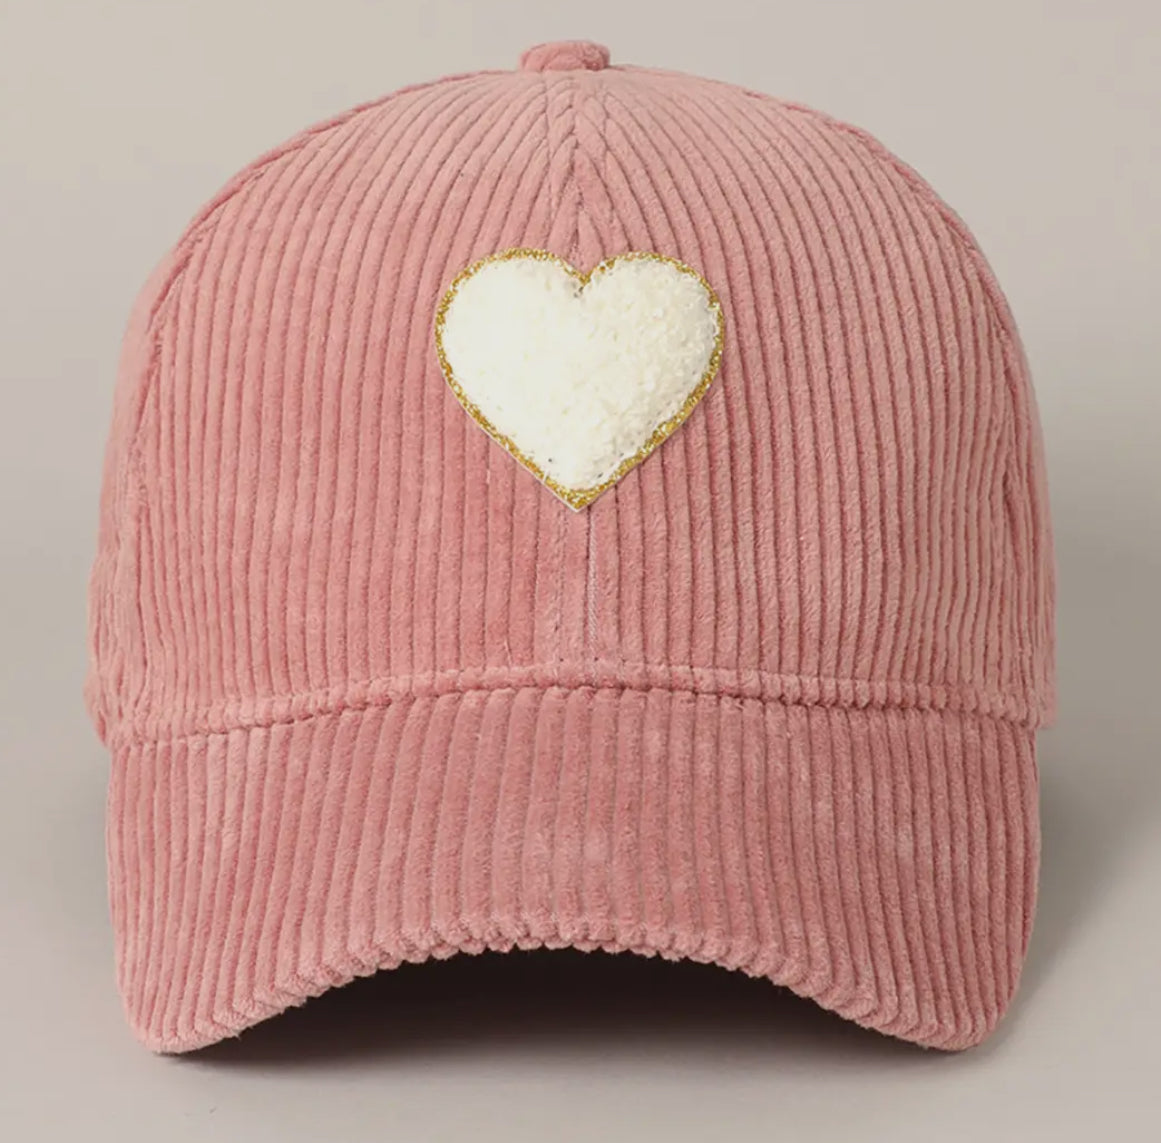 Love Hats